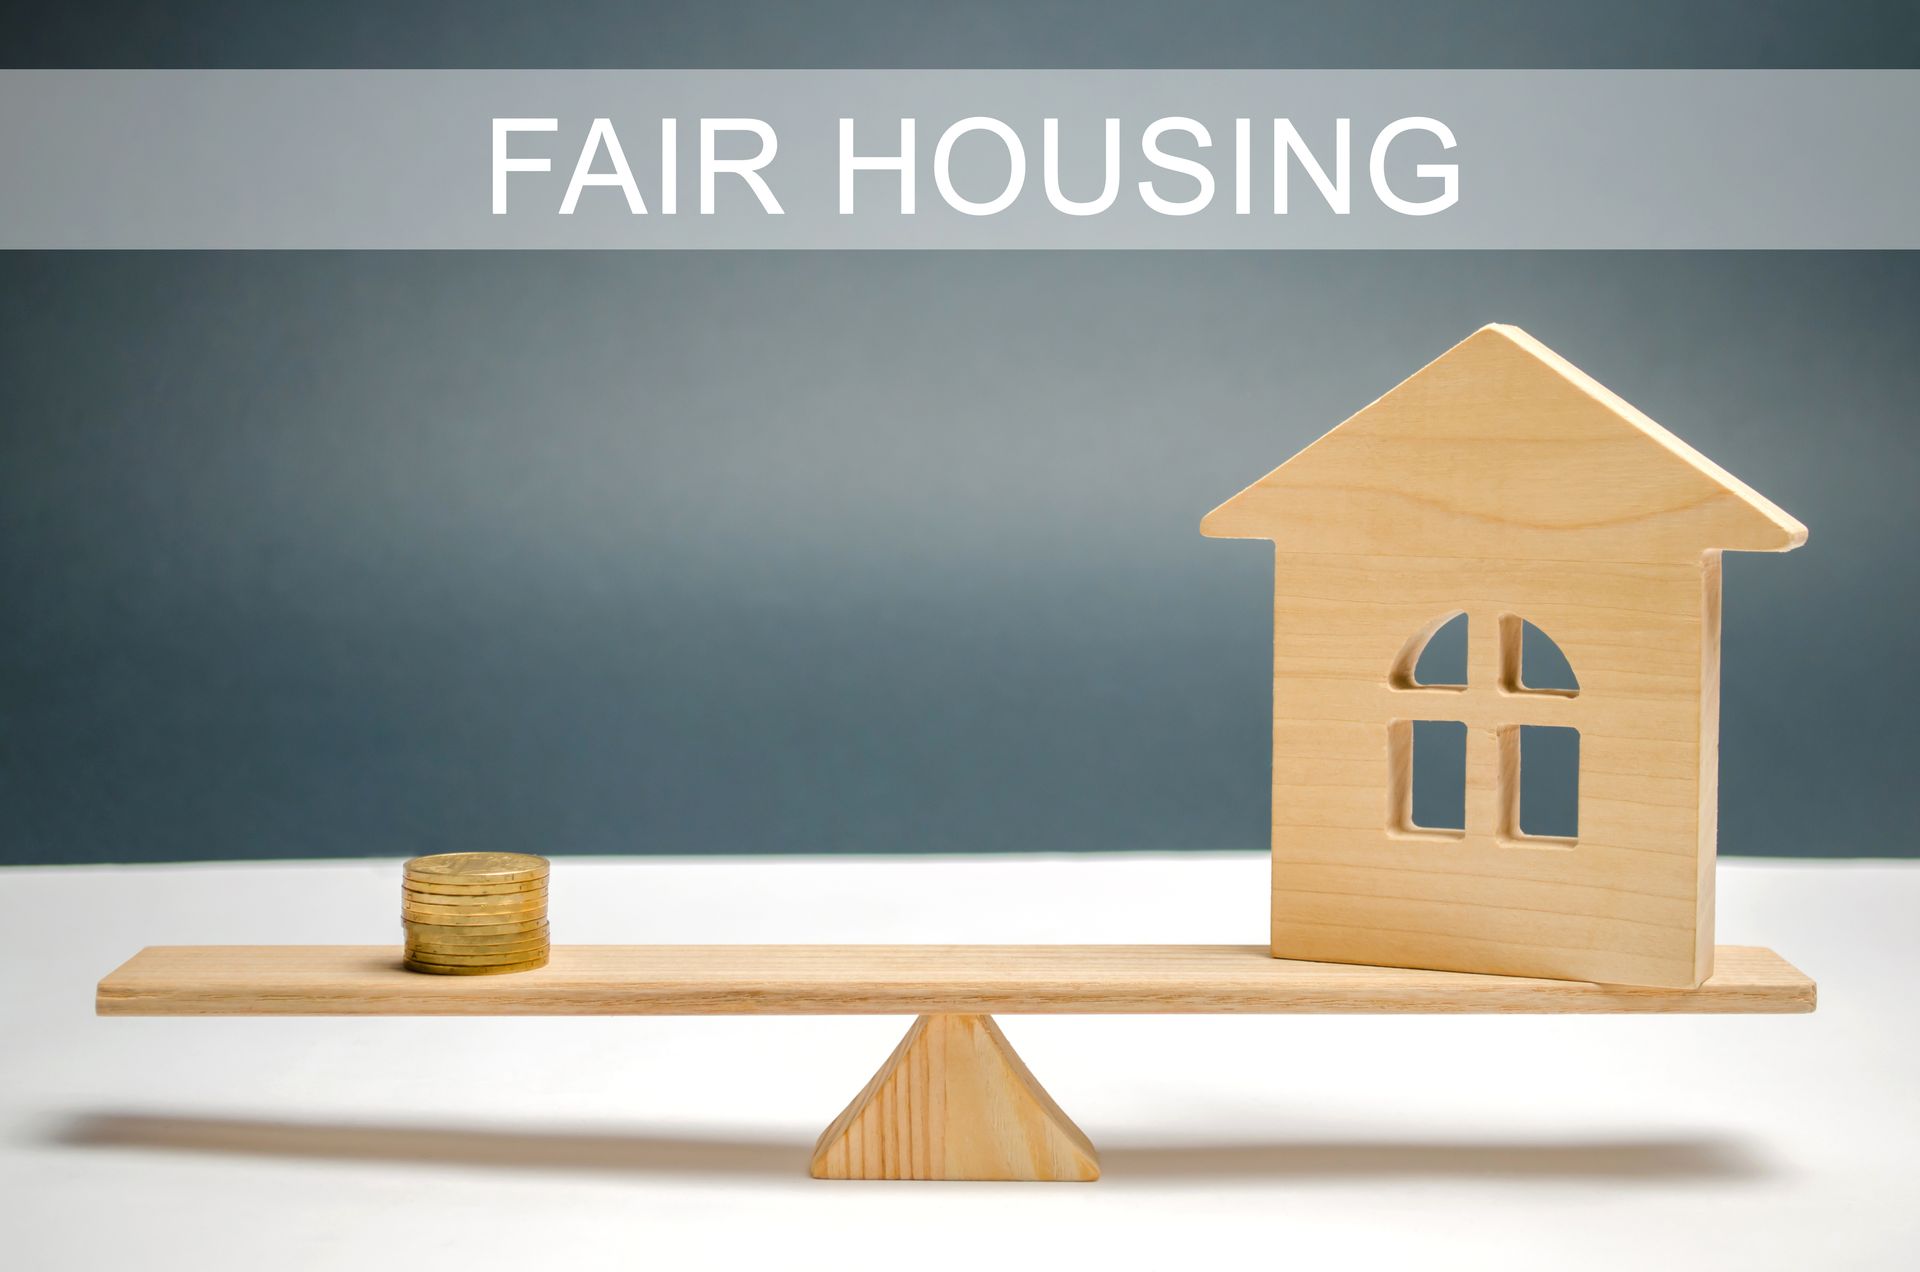 HGAR Offers Fair Housing Education